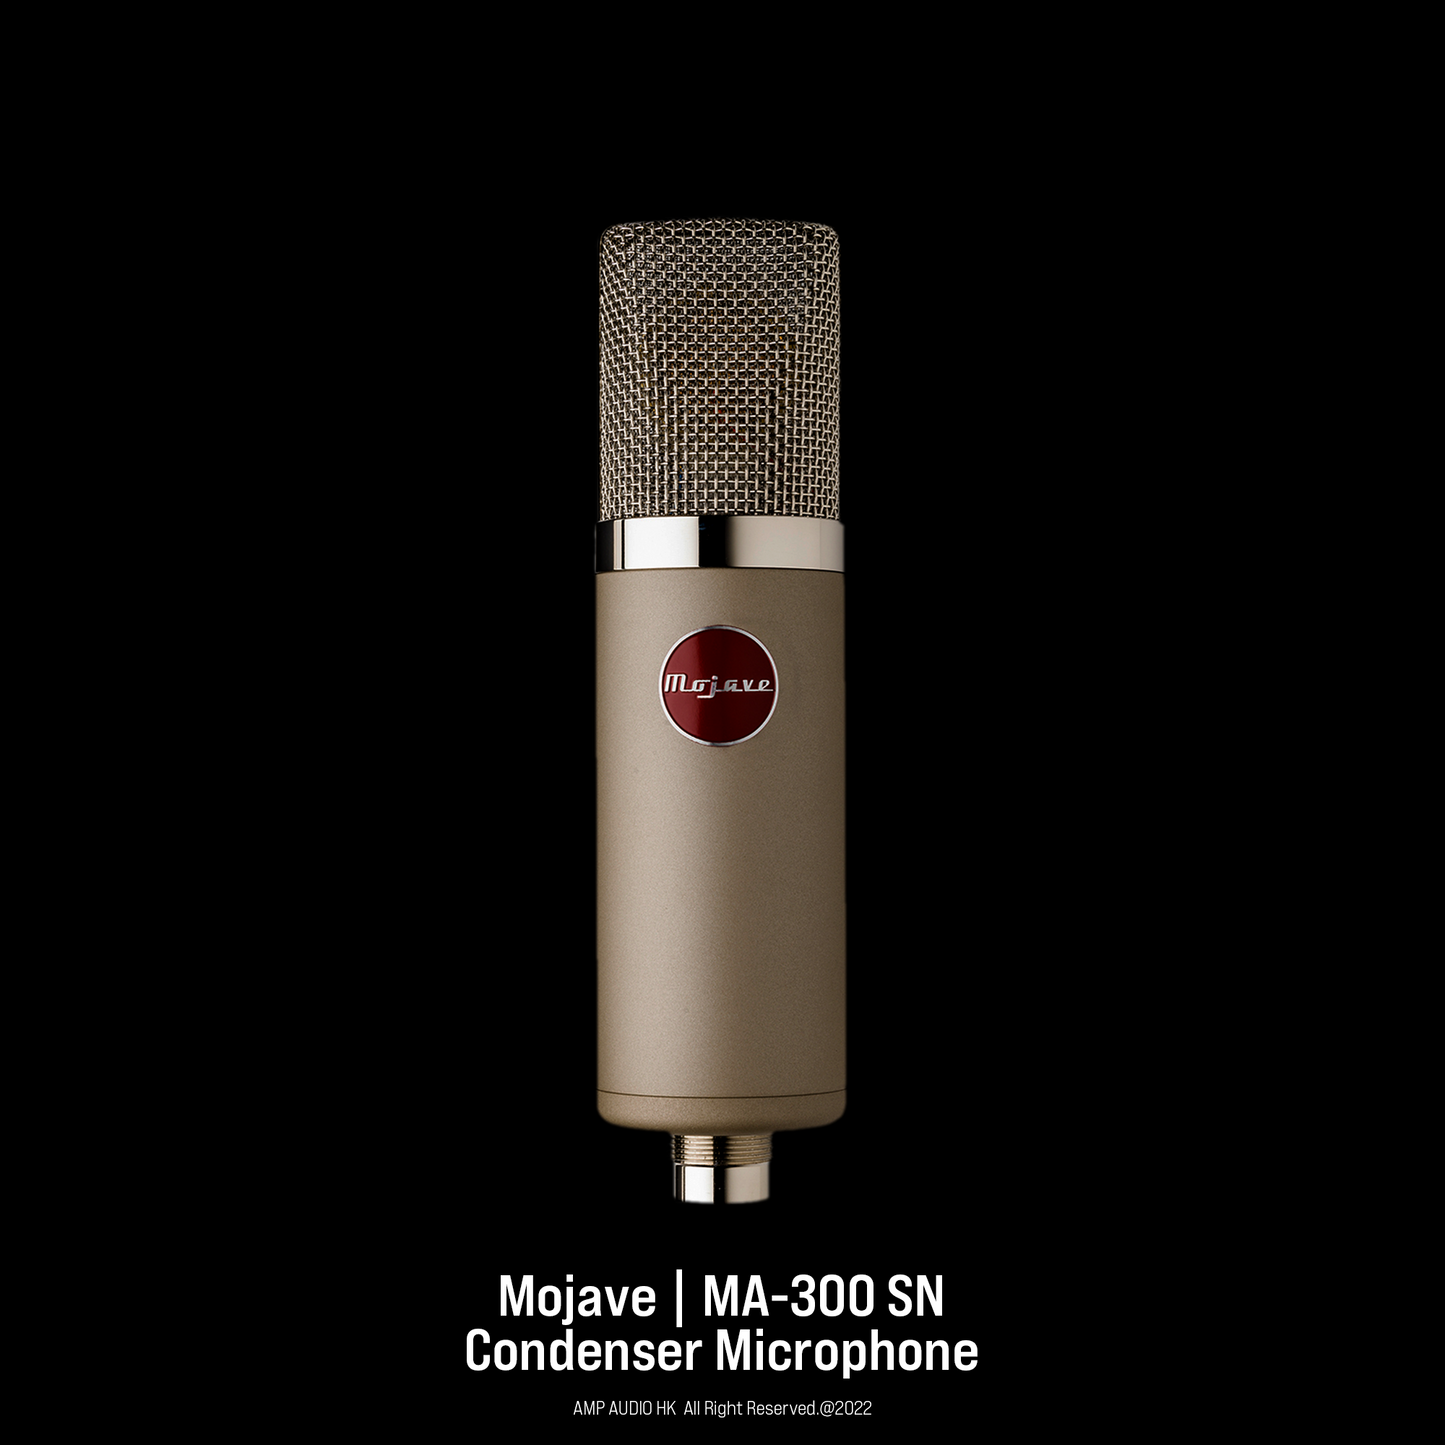 Mojave | MA-300 SN